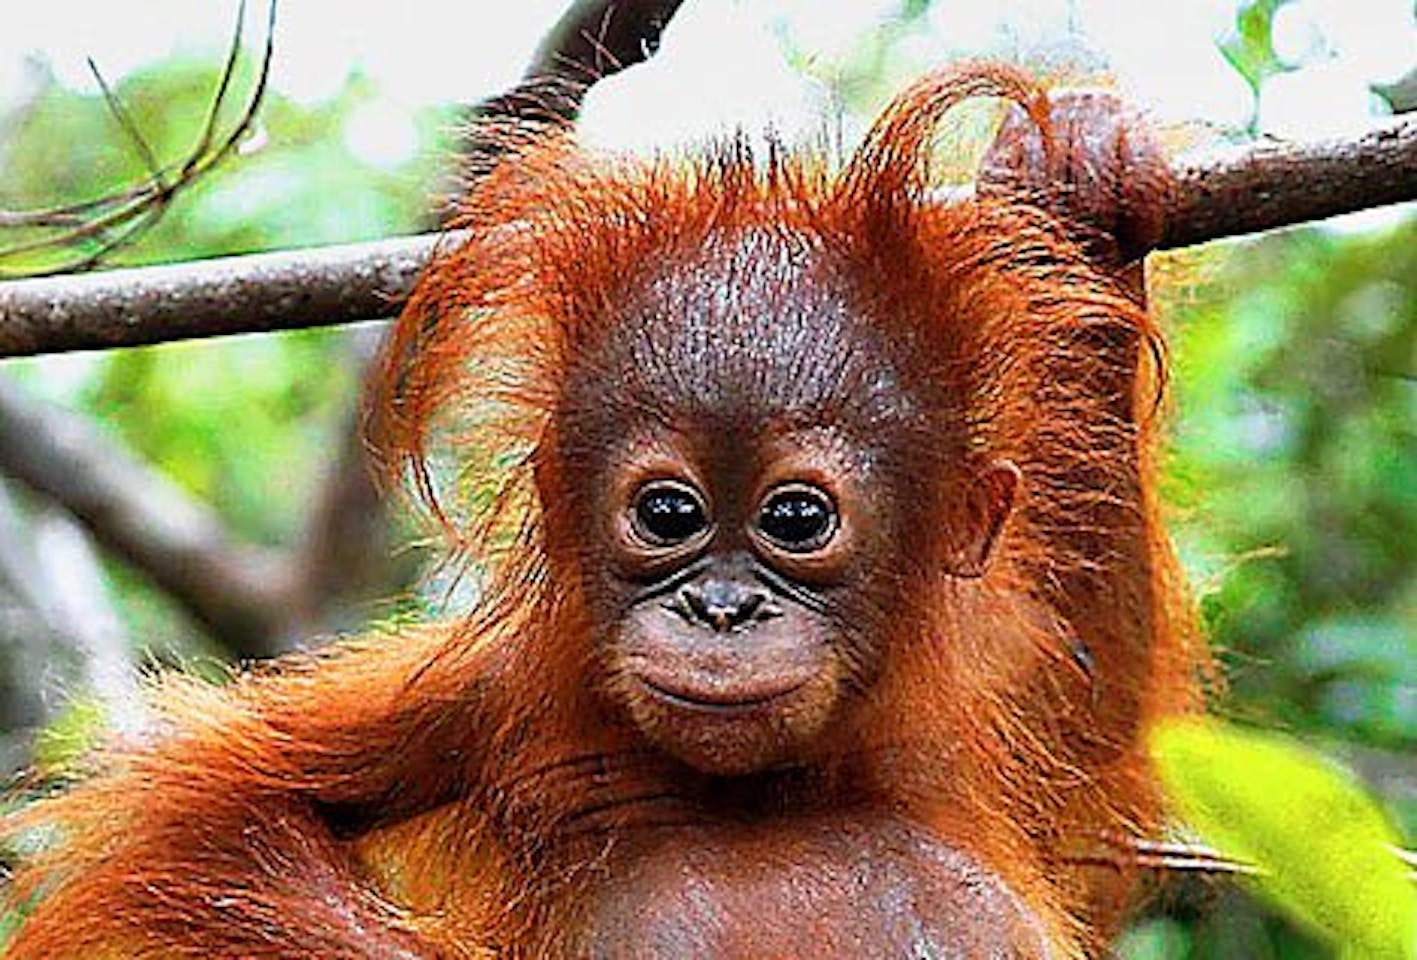 Borneo Orangutan